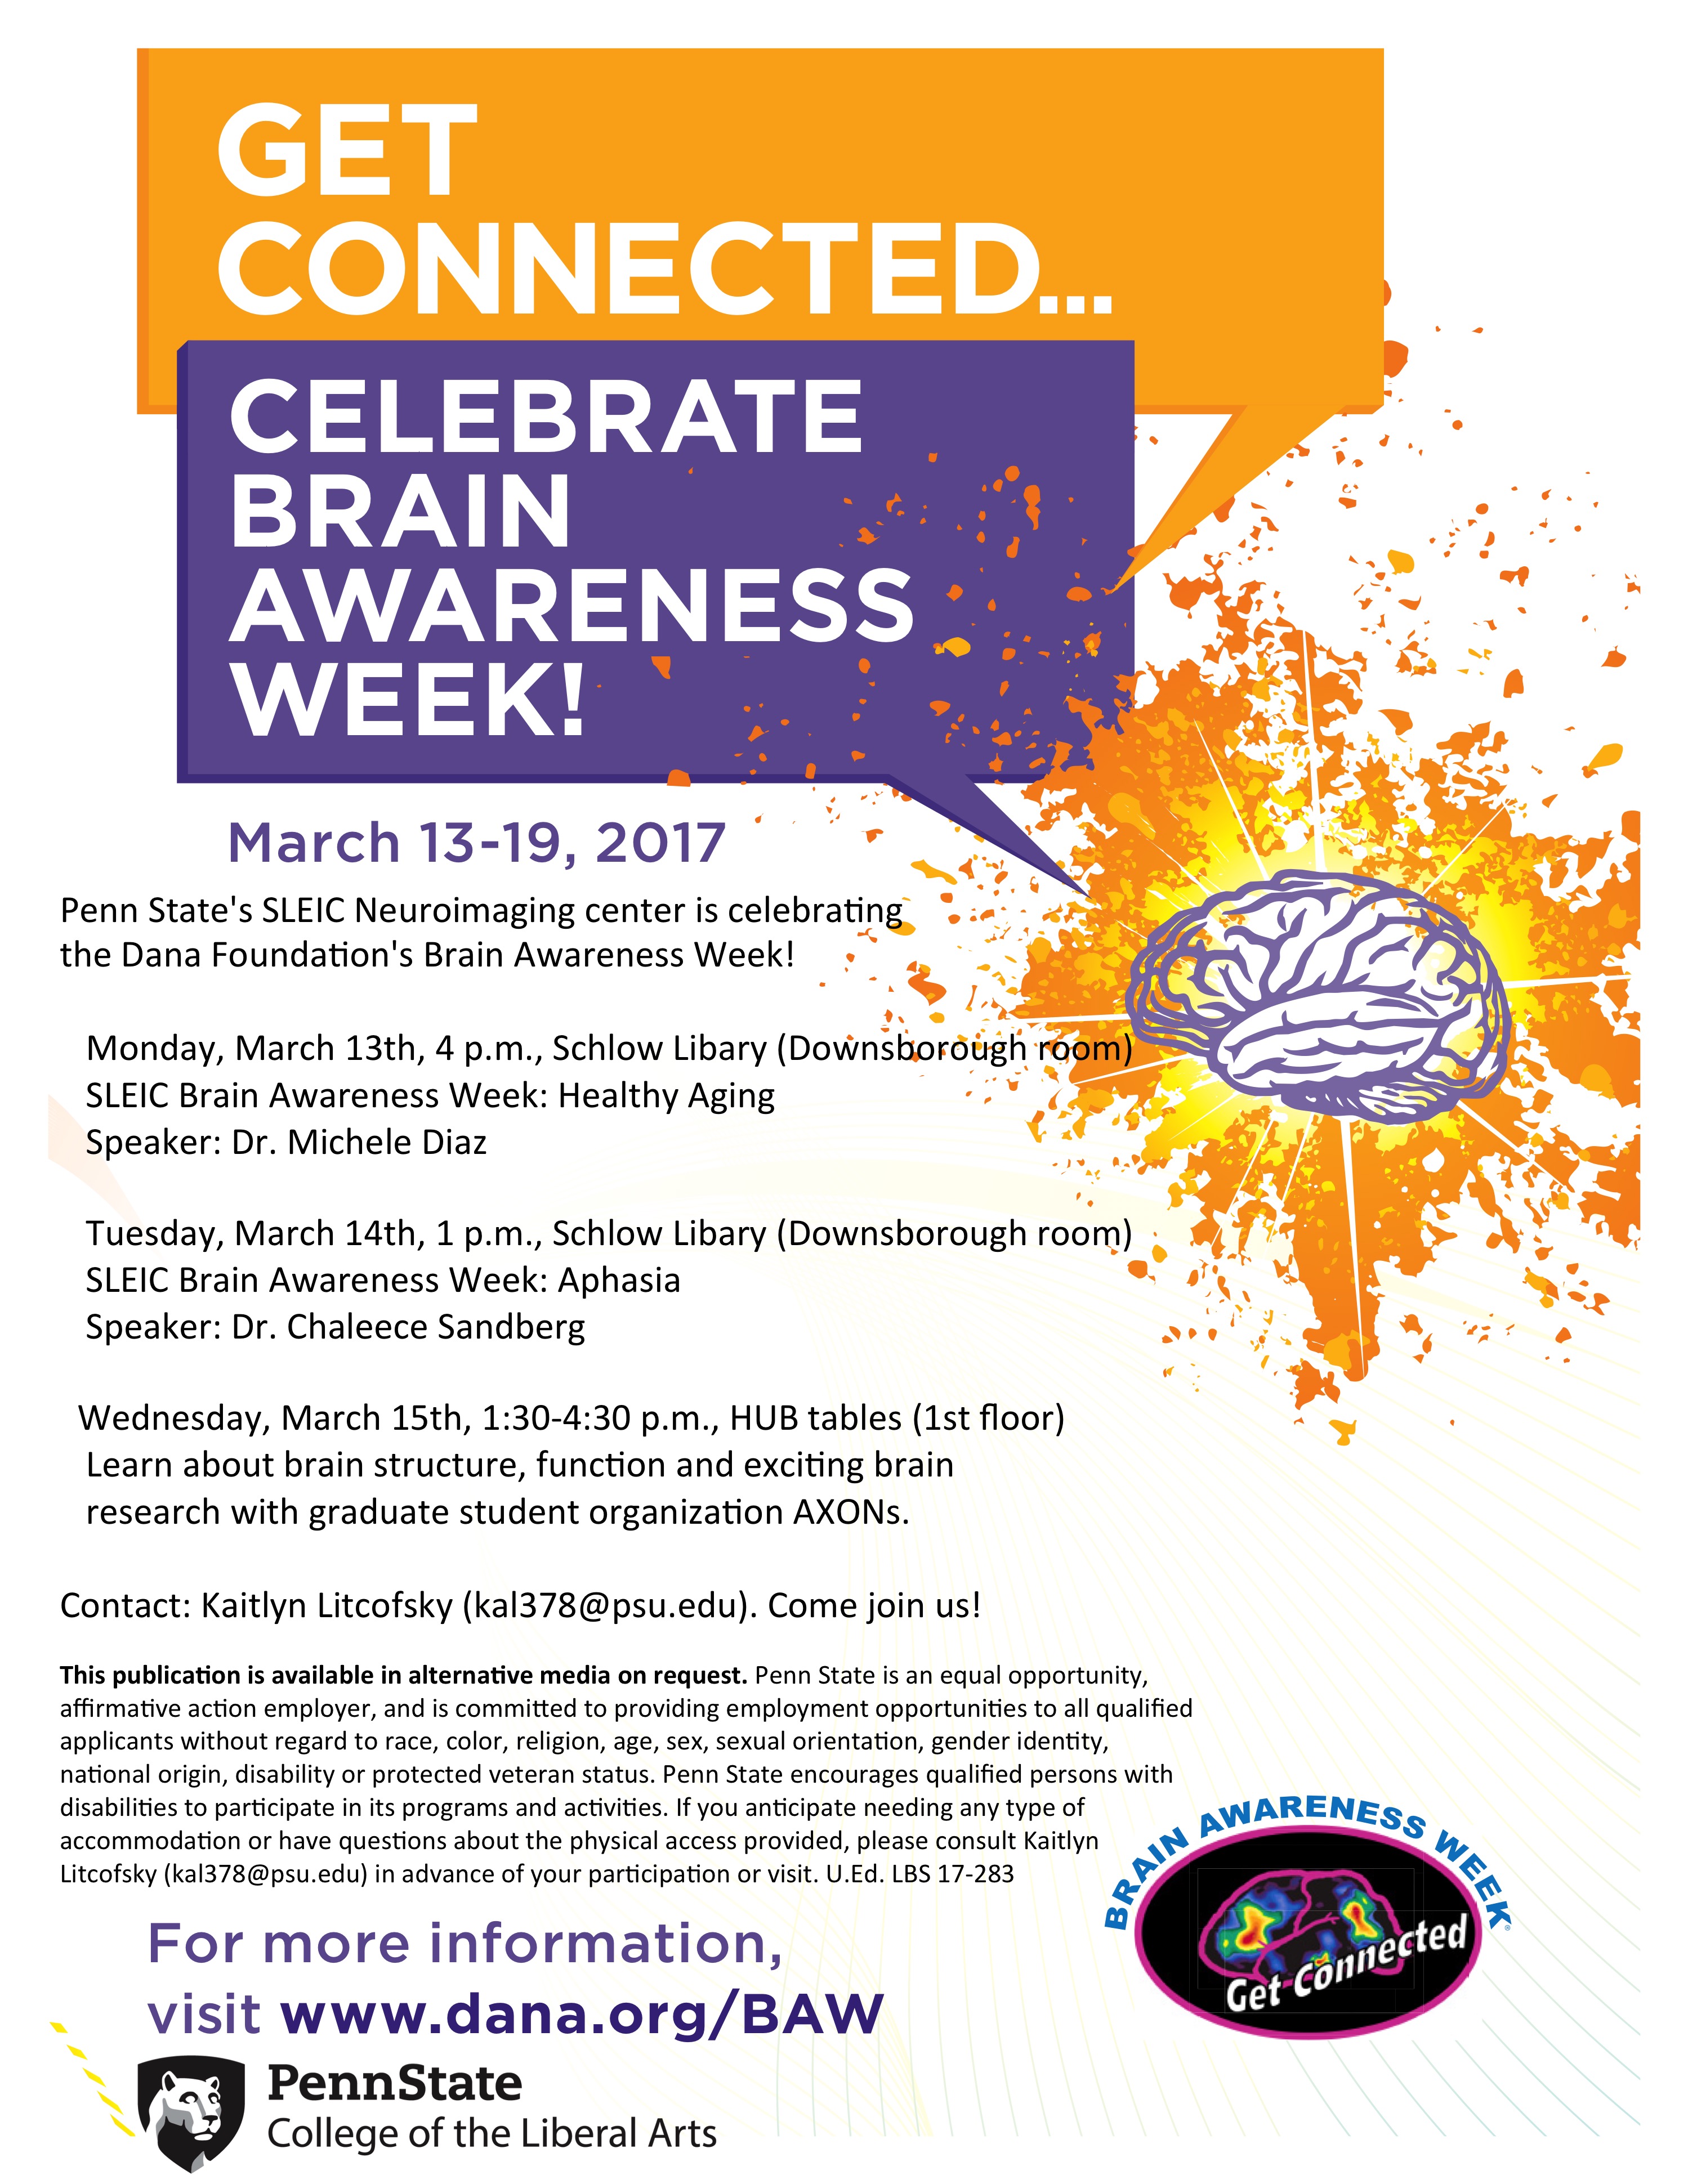 Flyer for SLEIC Brain Awareness Week